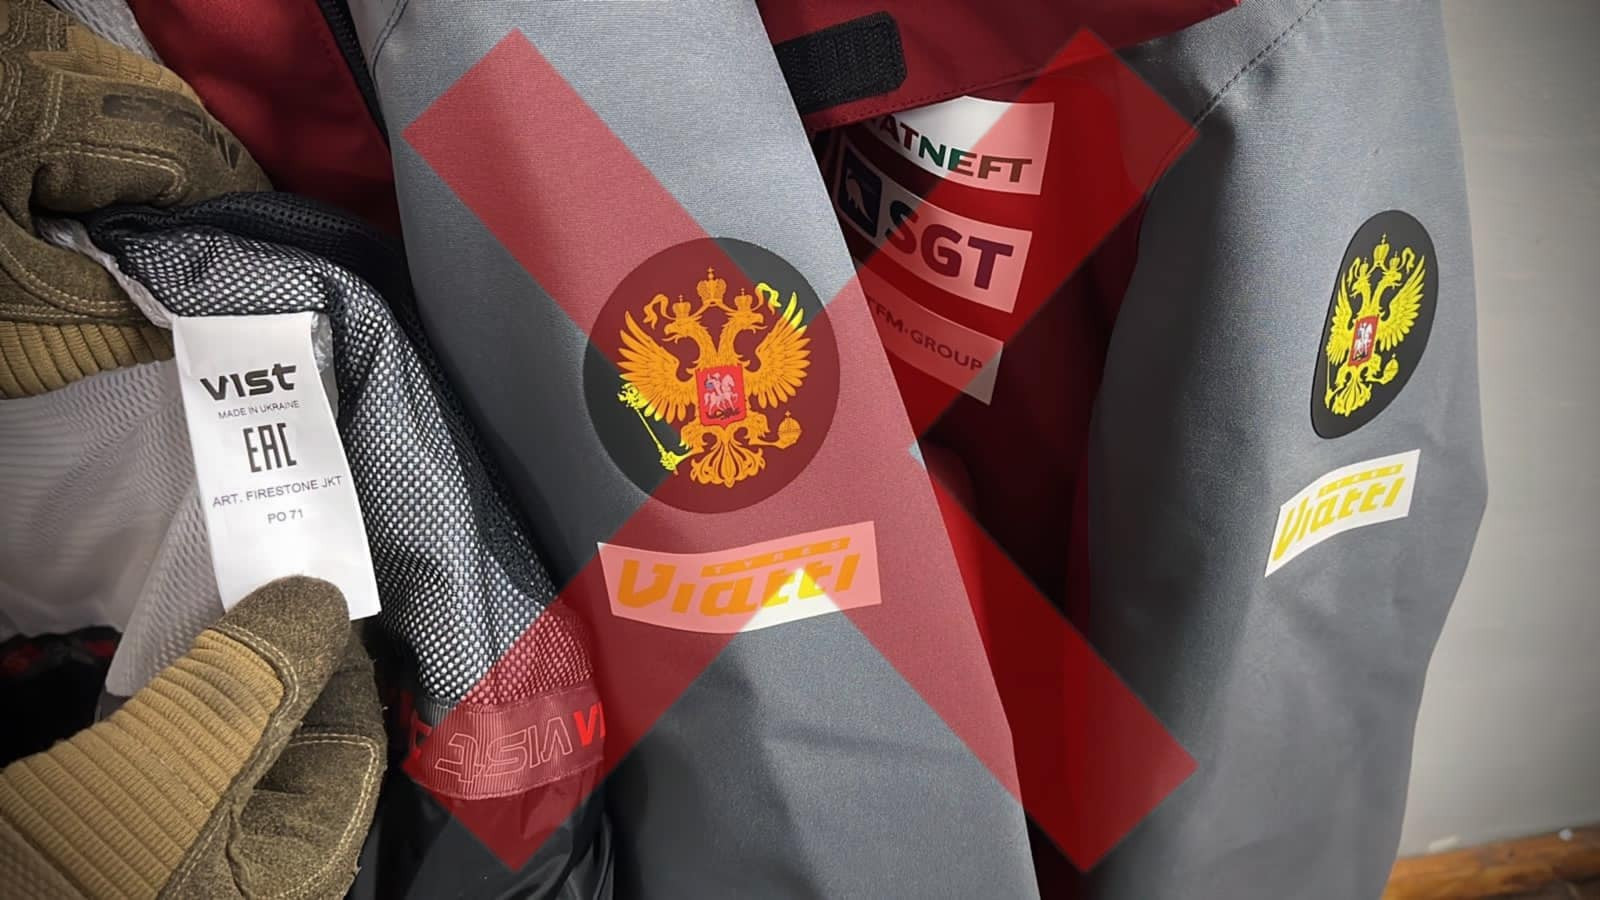 Ukrainian company secretly produced jackets for Russia